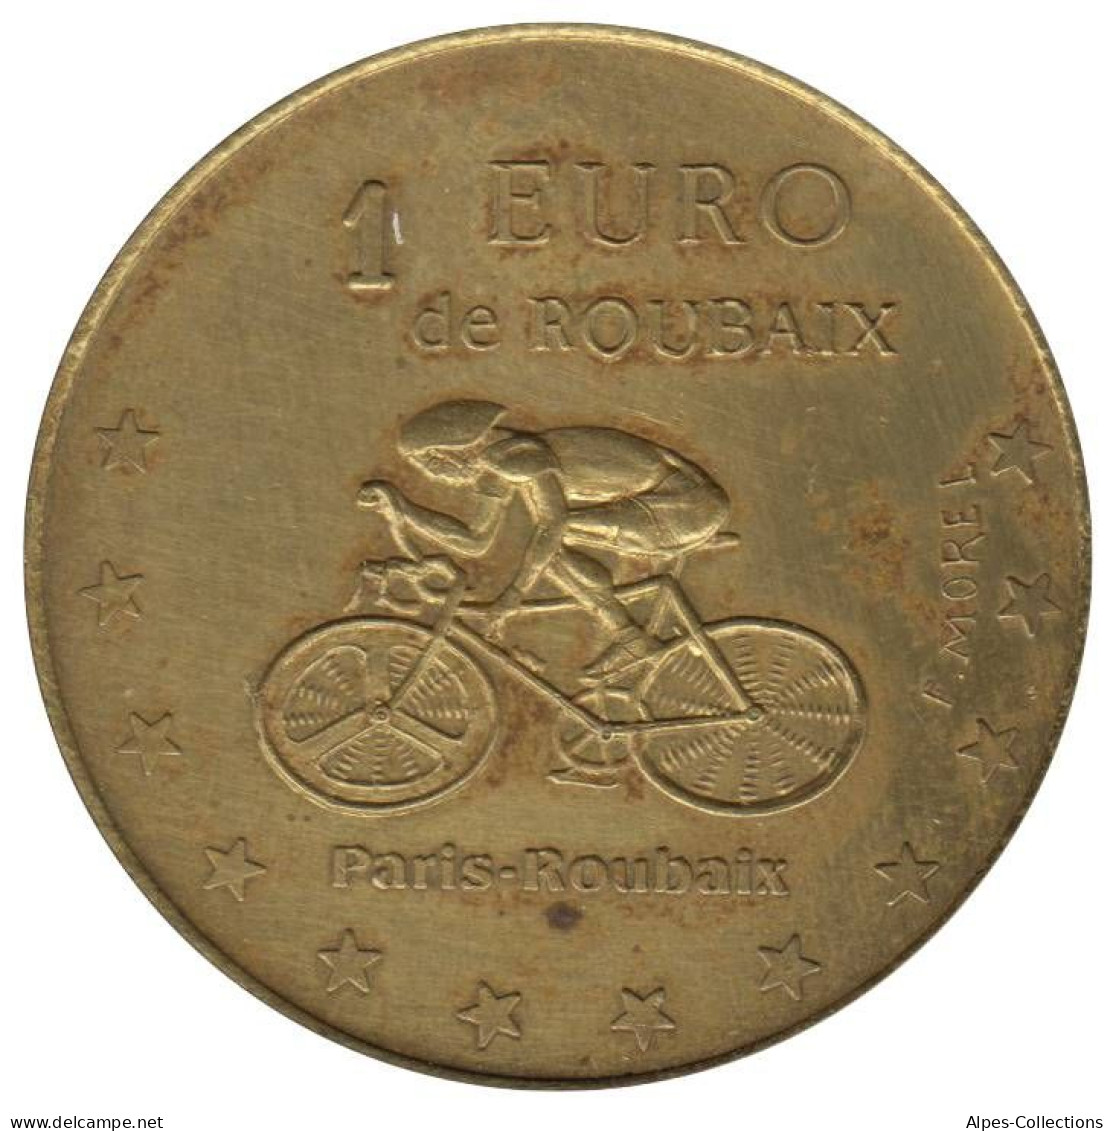 ROUBAIX - EU0010.1 - 1 EURO DES VILLES - Réf: NR - 1998 - Euros De Las Ciudades